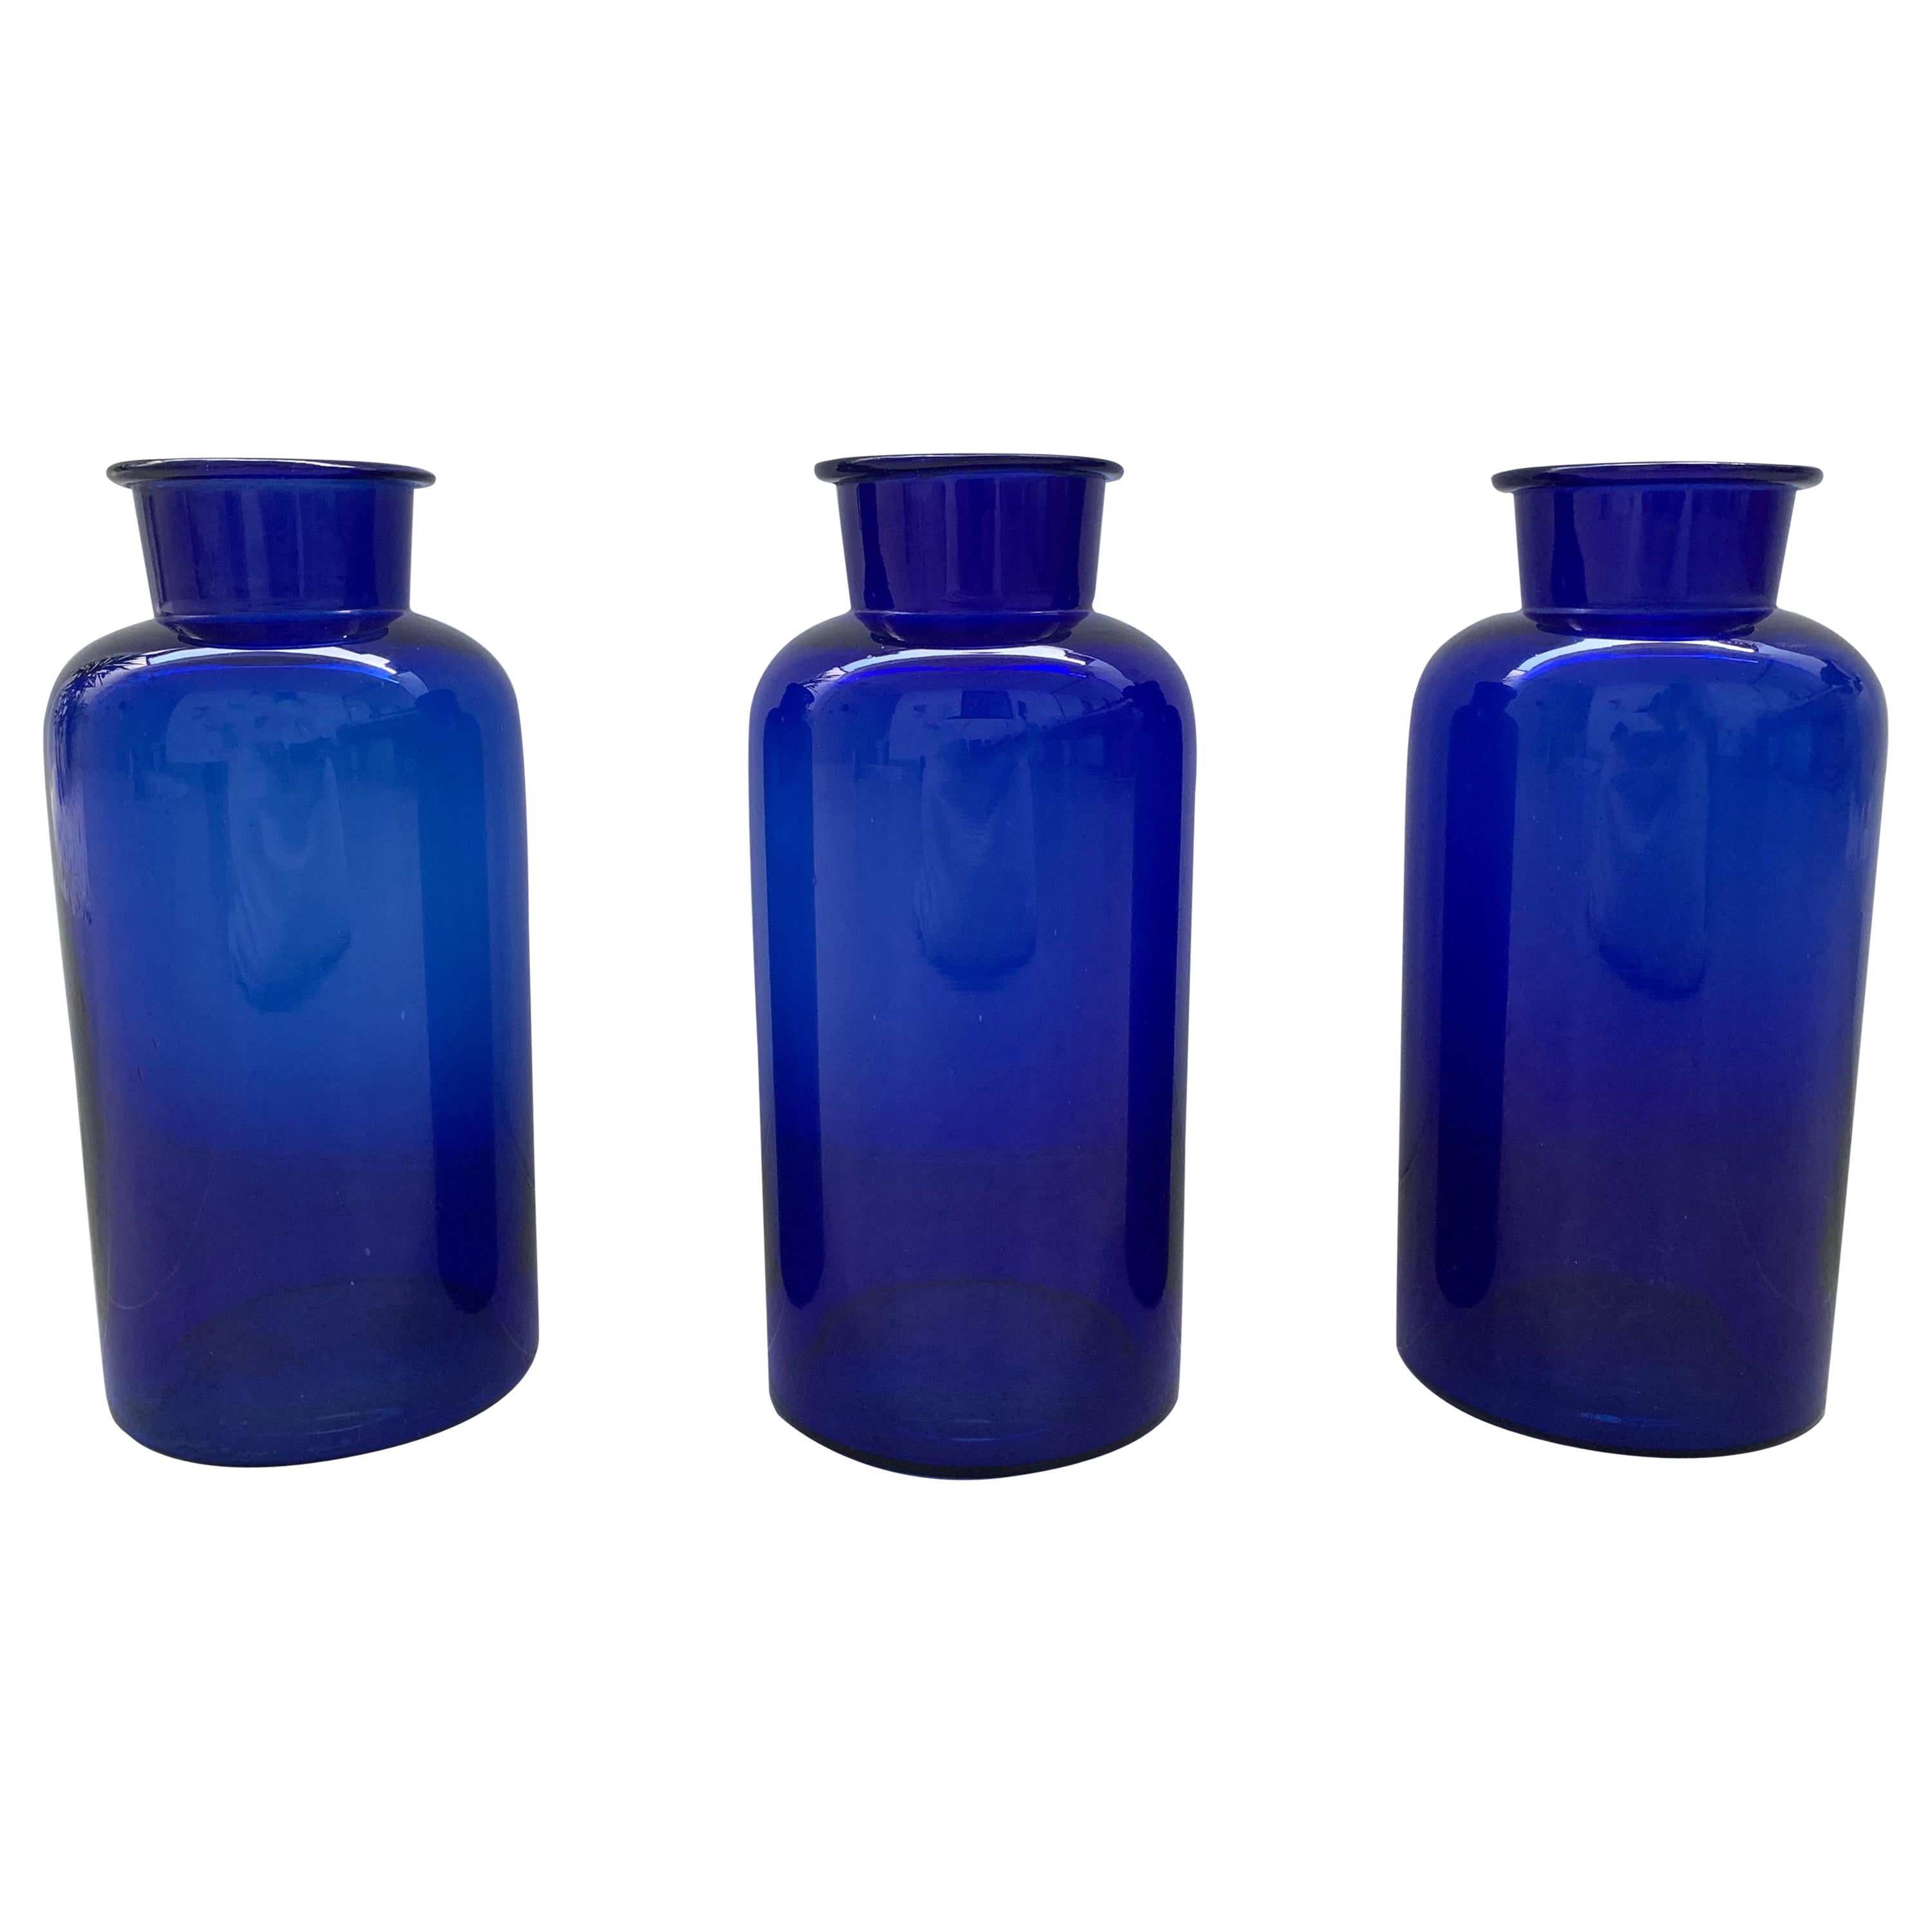 Vintage Cobalt Blue Pharmacy Bottles from Holland